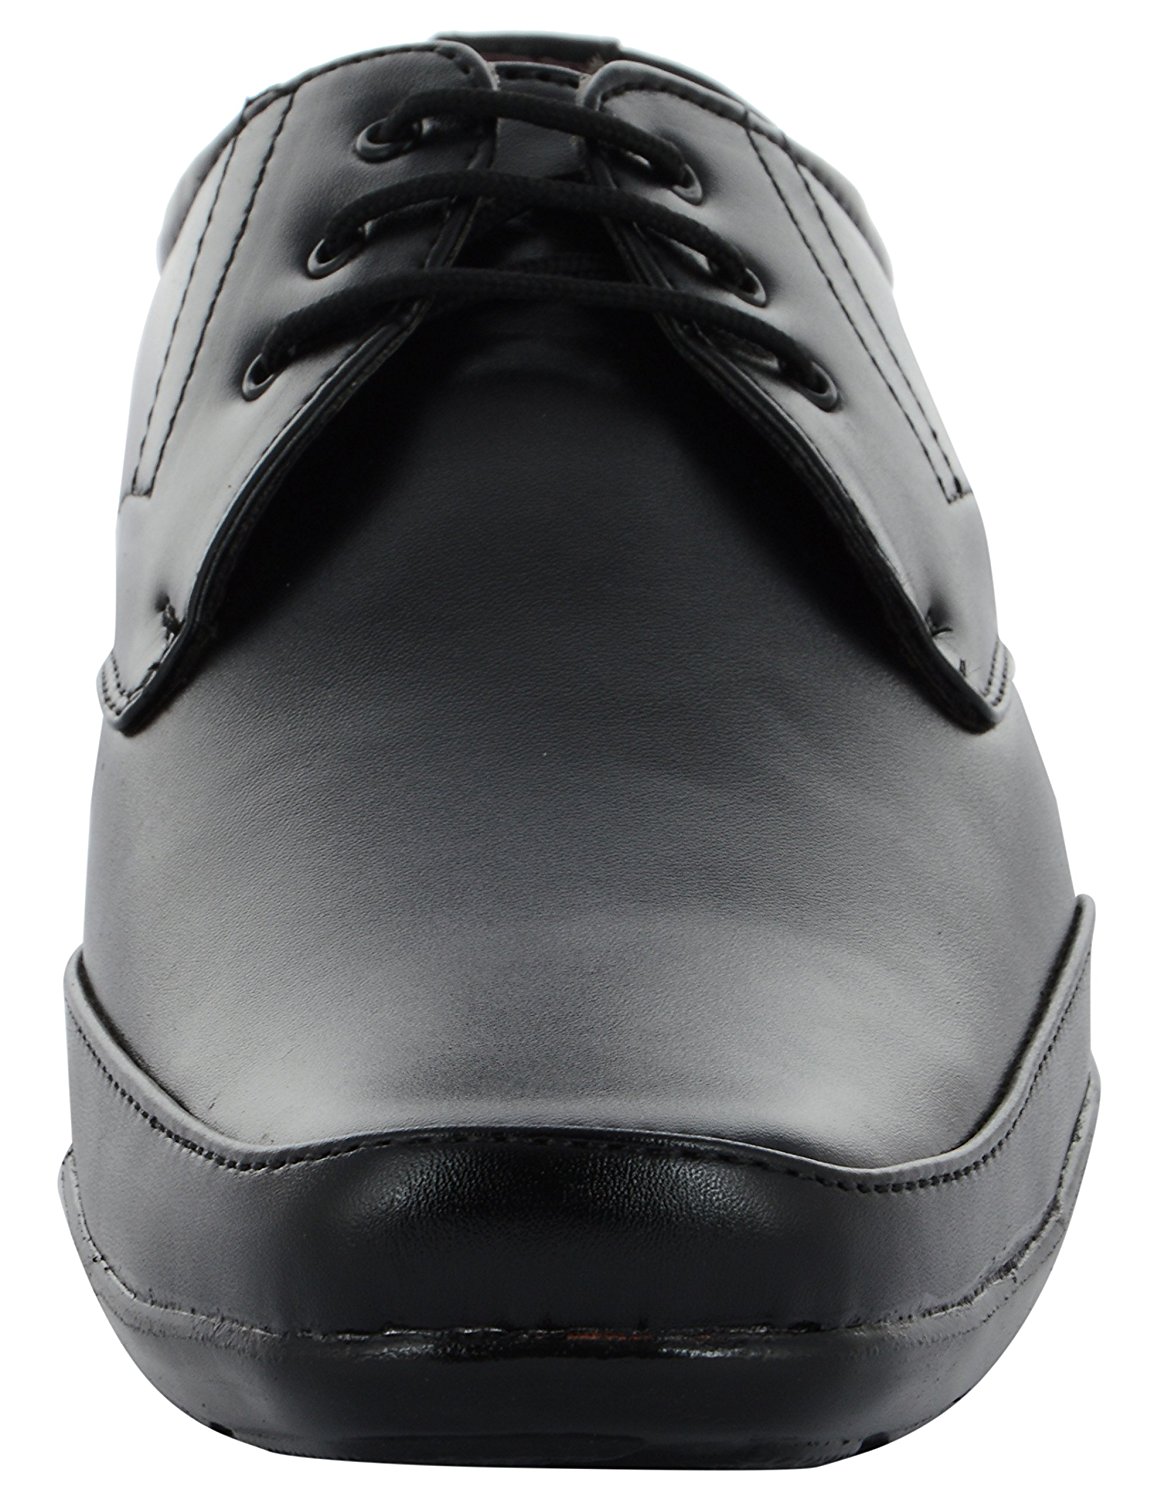 Buy Footgear Men's Synthetic Derby Shoes Online @ ₹1999 from ShopClues